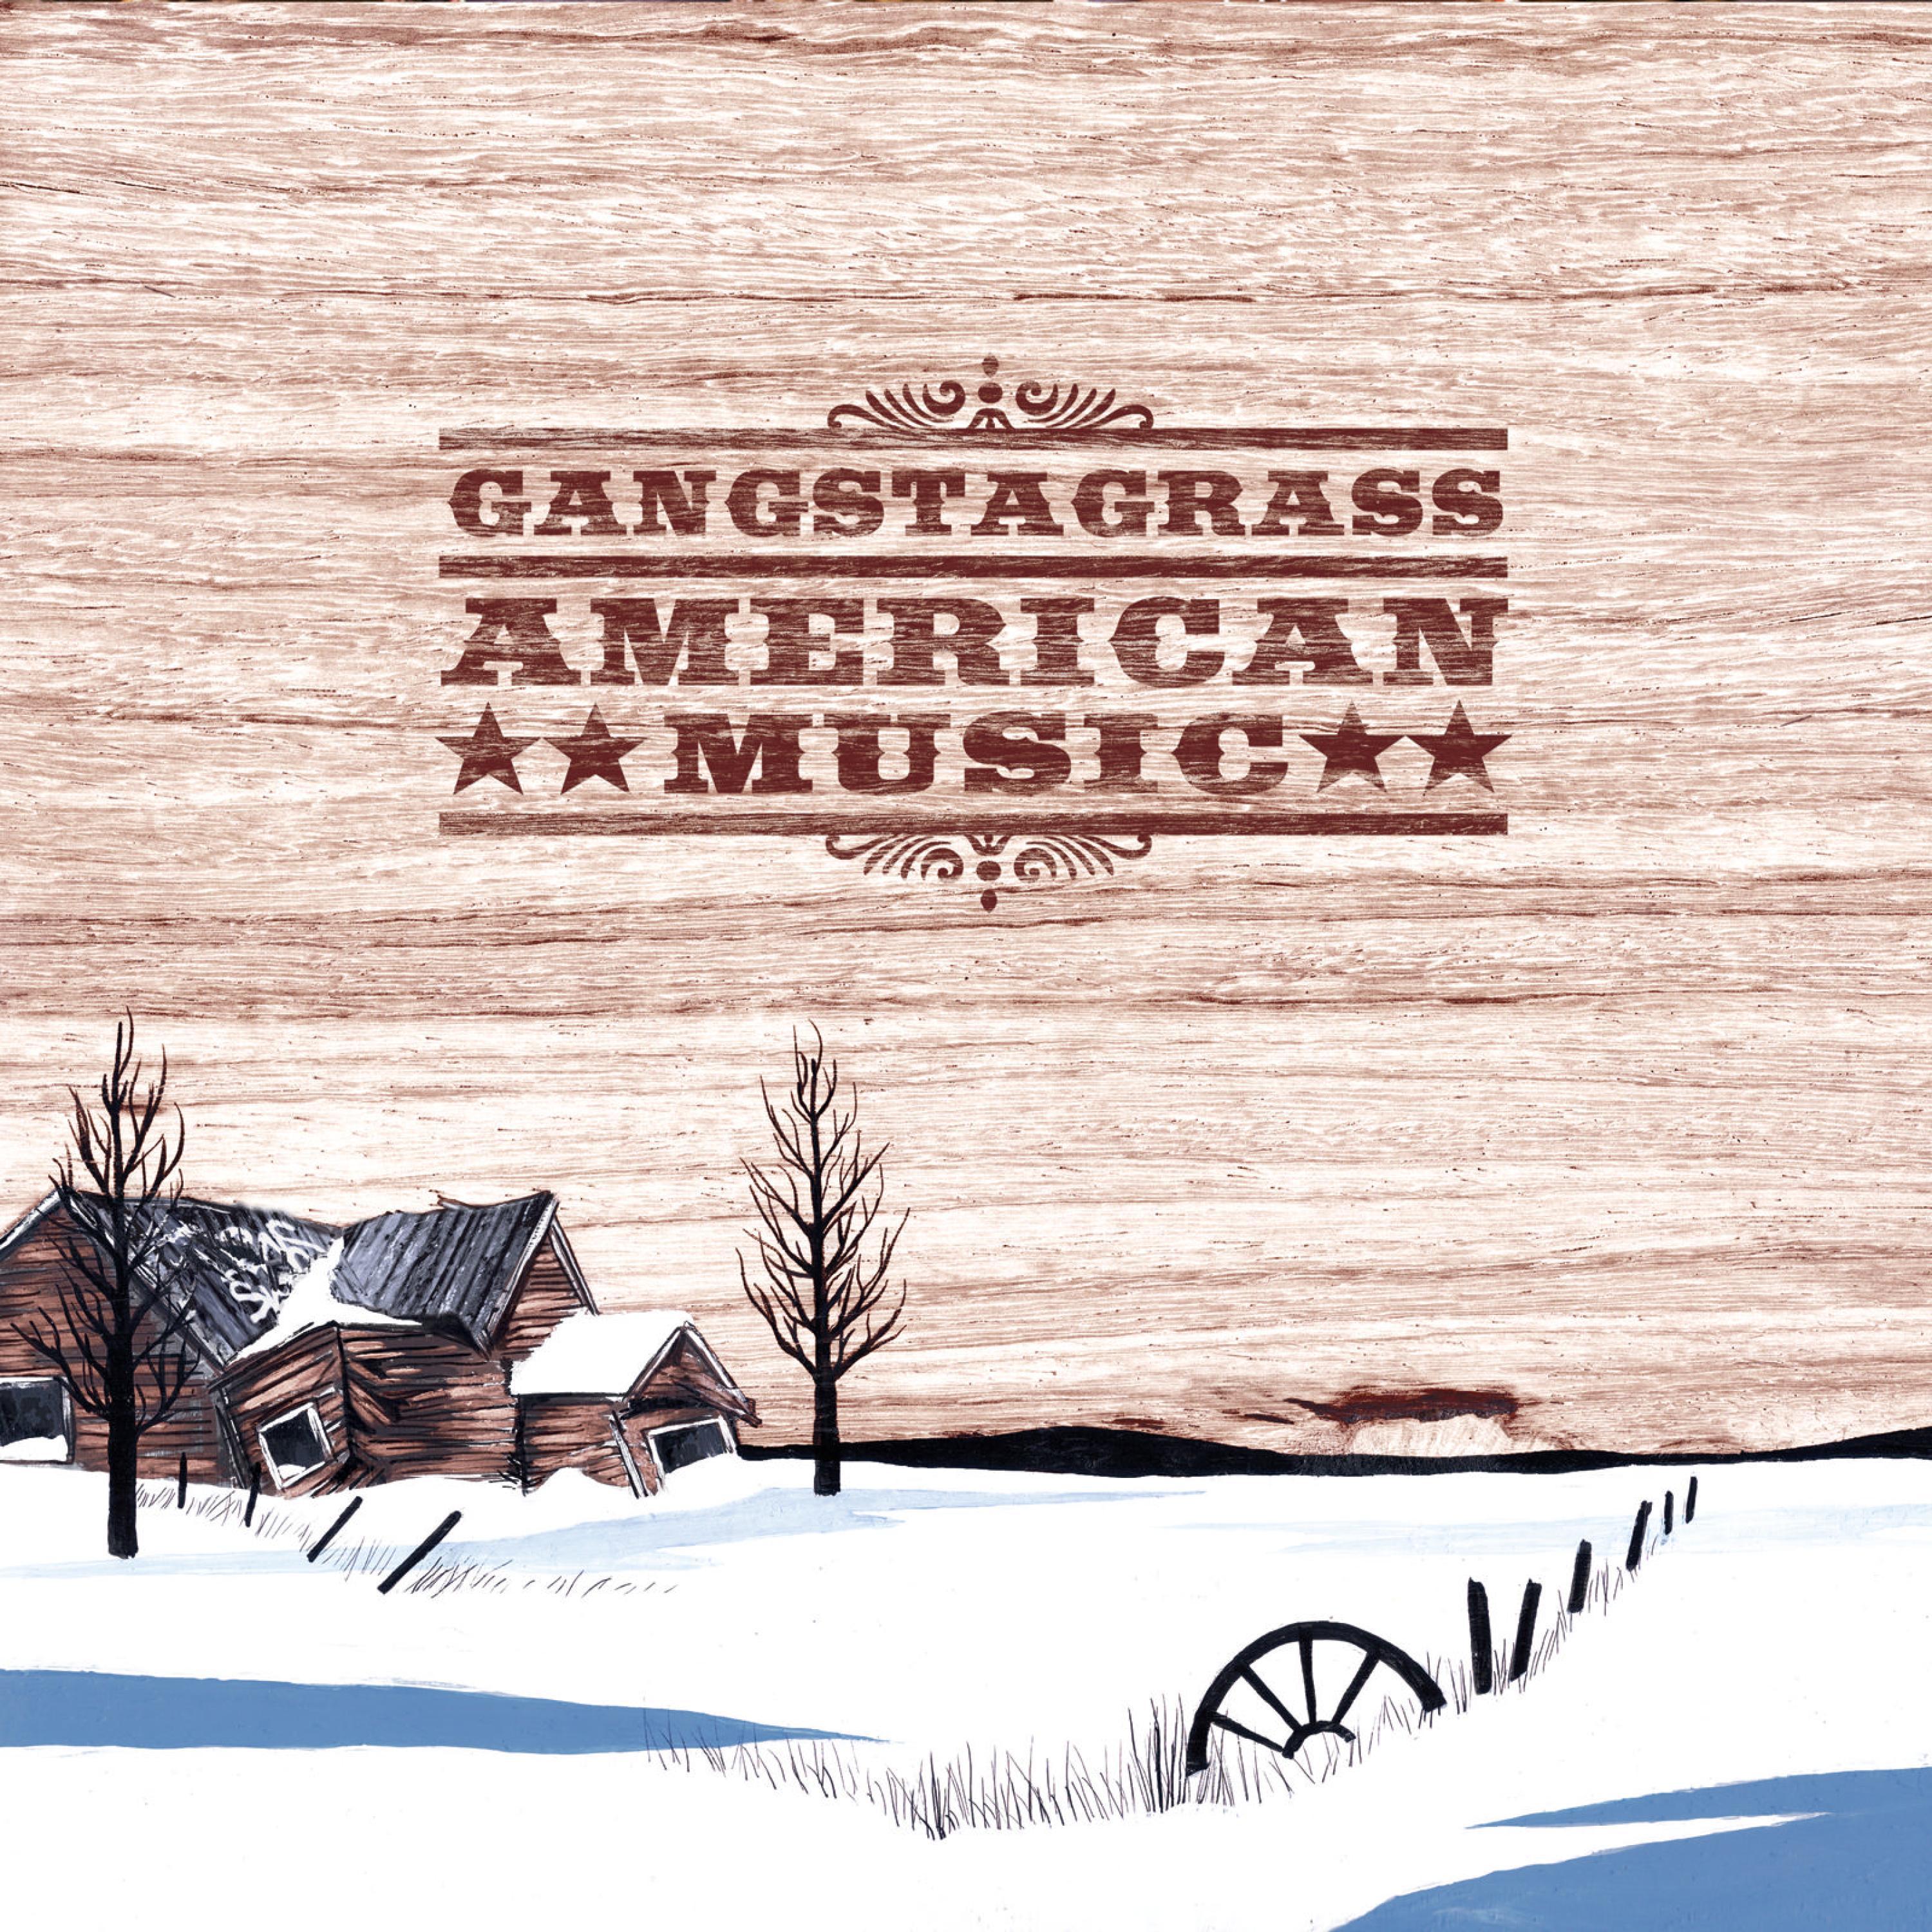 Gangstagrass - Aint Going to Heaven (feat. Dan Whitener, R-Son, Dolio The Sleuth, T.O.N.E-z, Soul Khan, TOMASIA, Smif N Wessun, Nitty Scott, MC, Liquid, 5 One, Al Camino, Atlas & Rench)